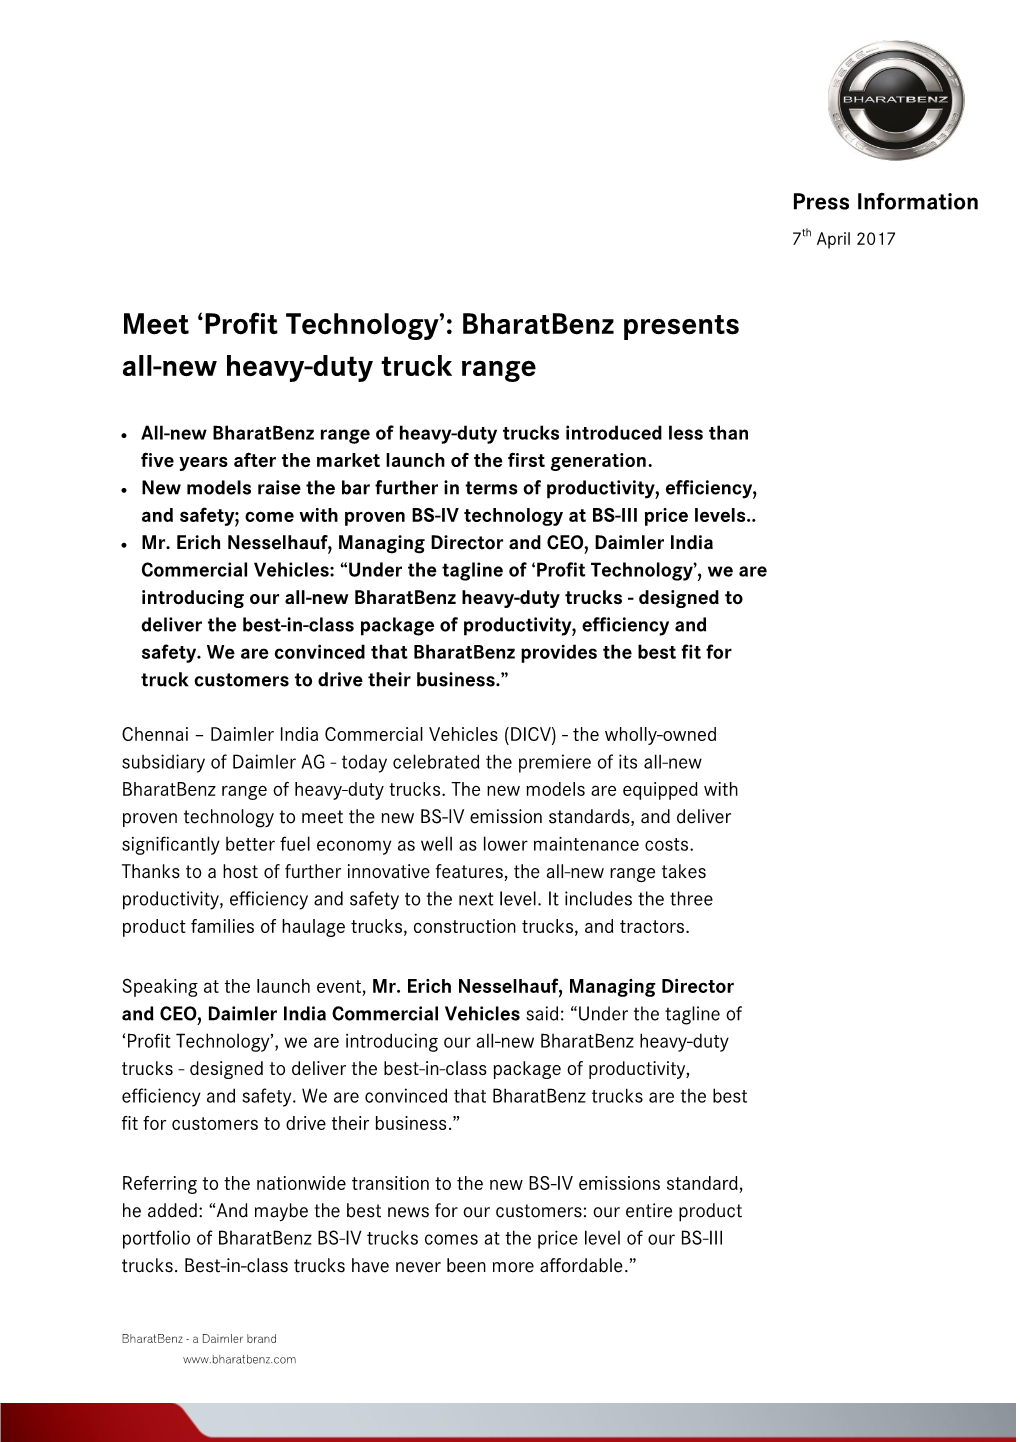 'Profit Technology': Bharatbenz Presents All